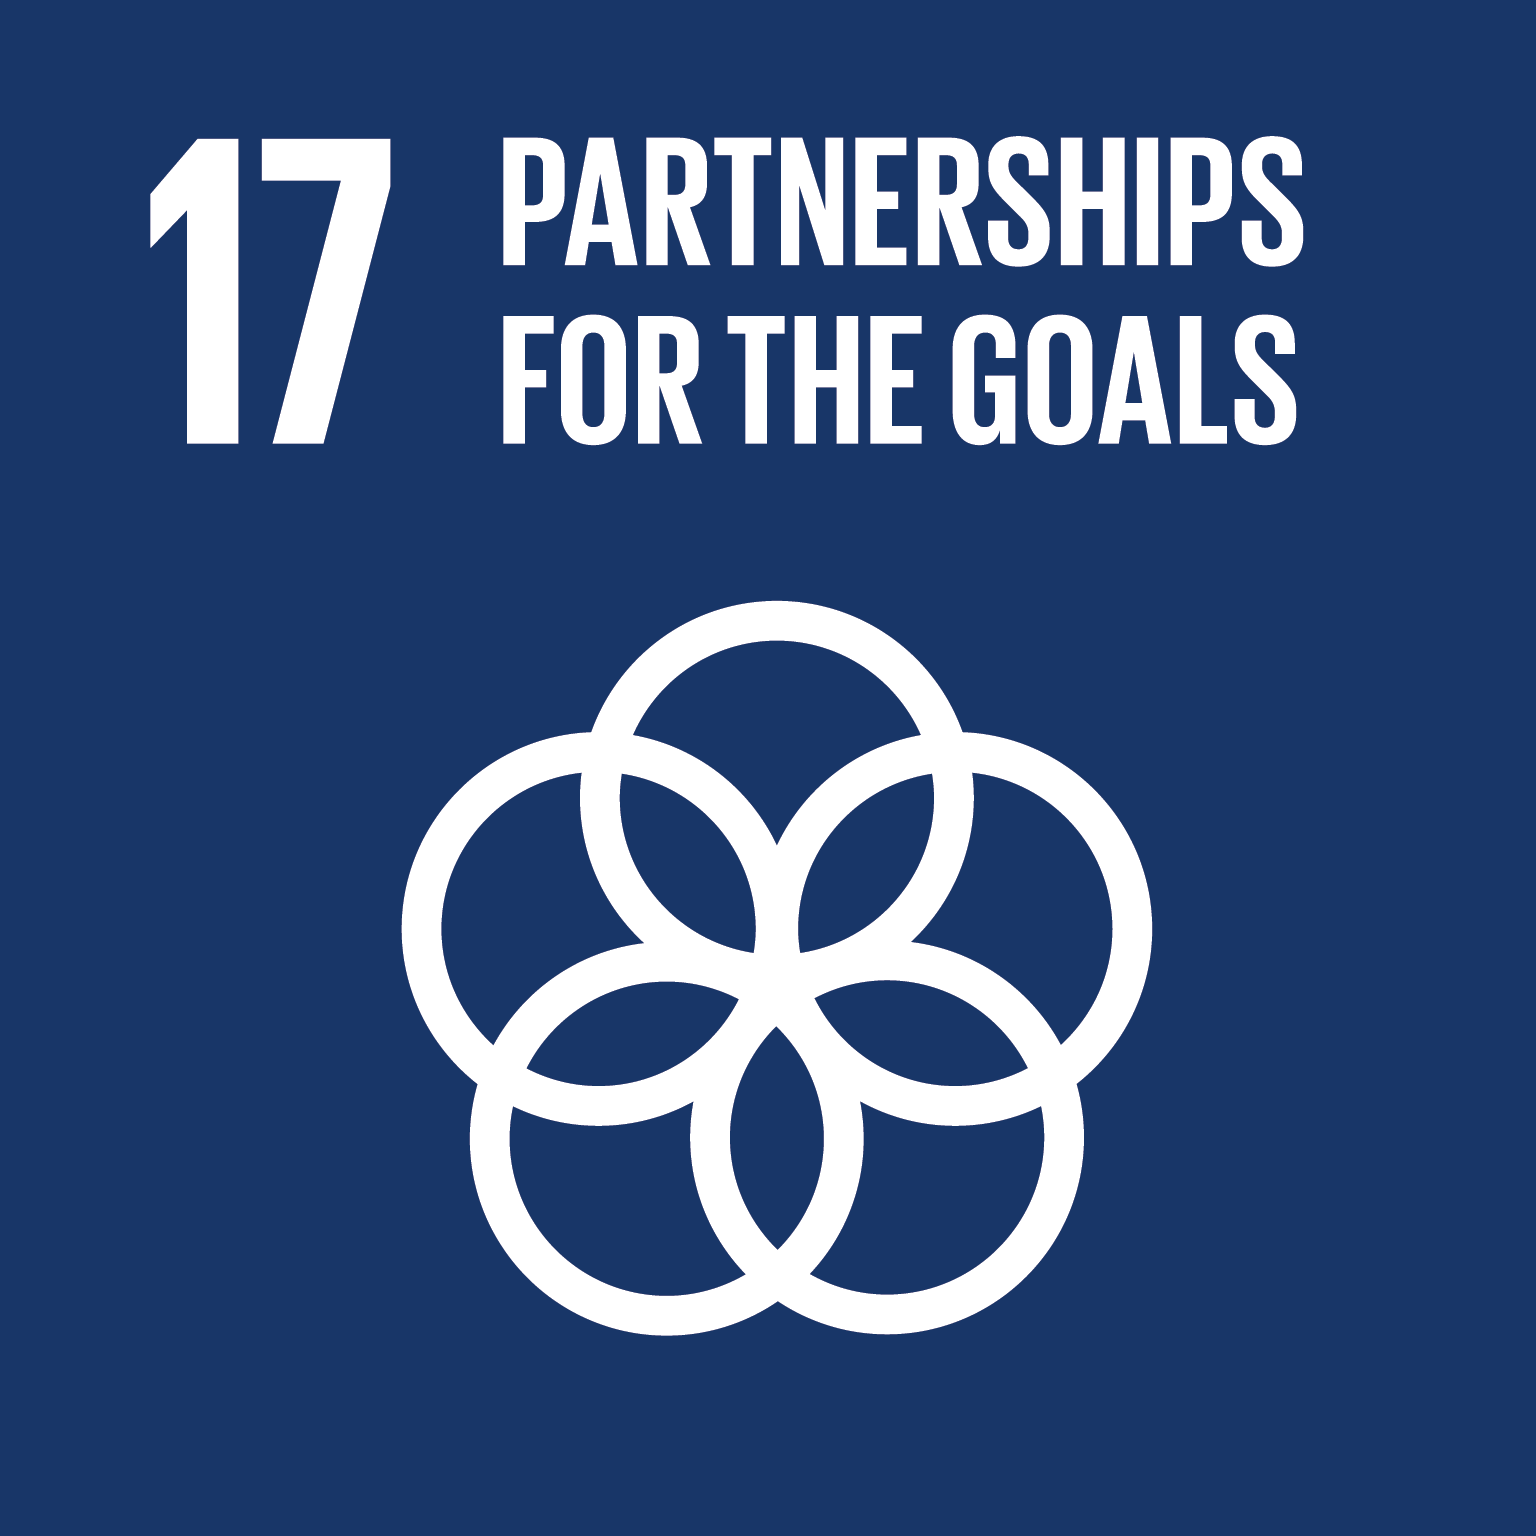 Goal 17 - Partnership for the Goals